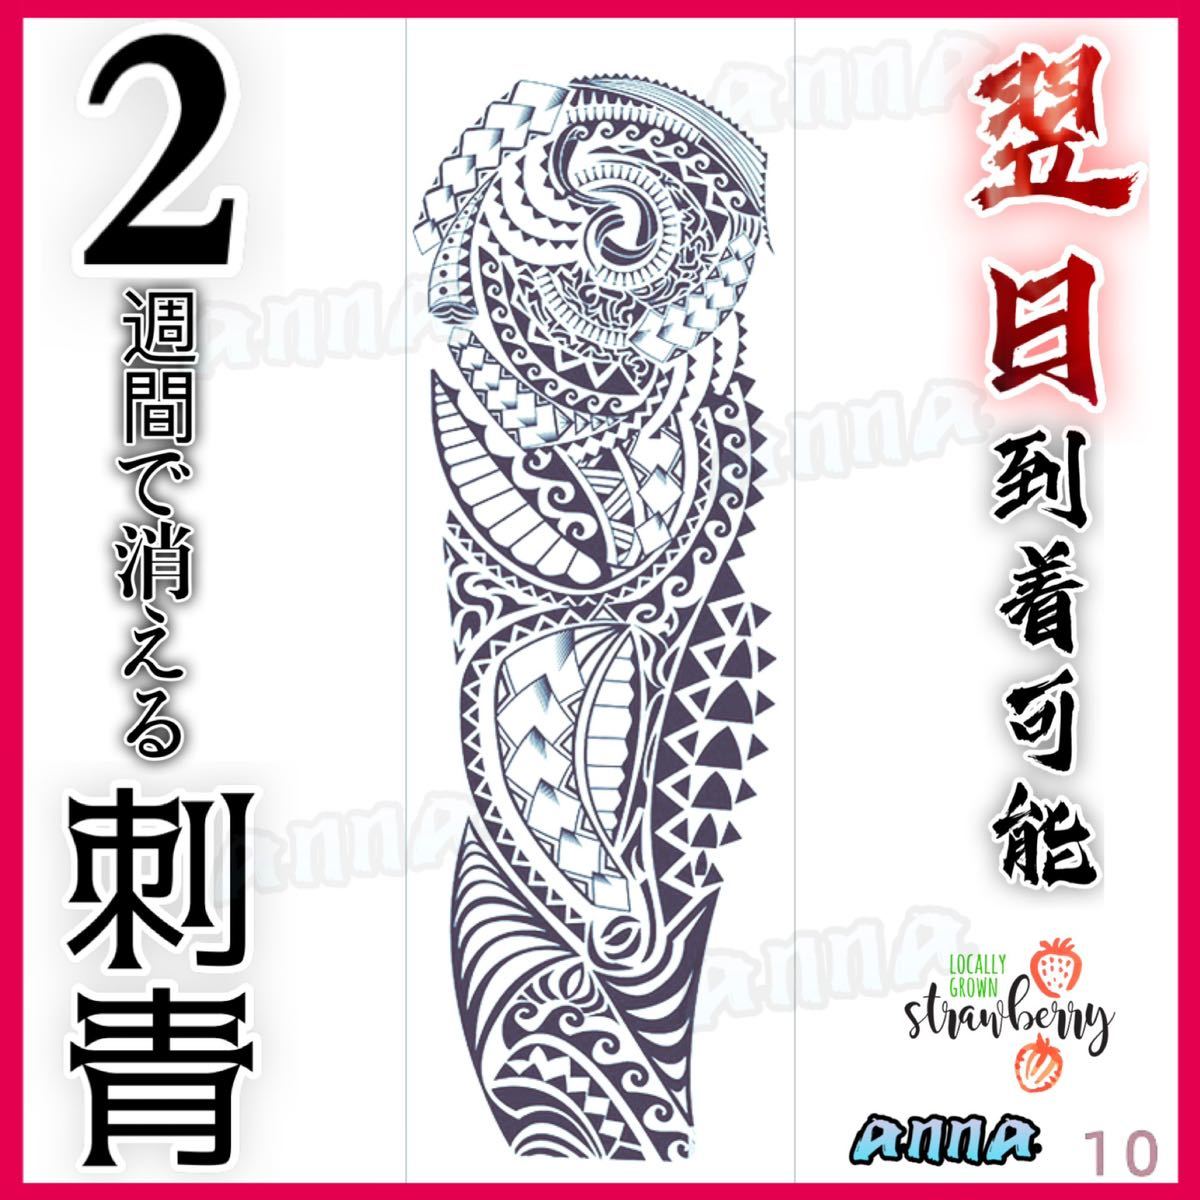 2 week . disappears 10 arm pair large scale henna ta toe Jug a tattoo seal tattoo seal tinto tattoo seal body art seal 